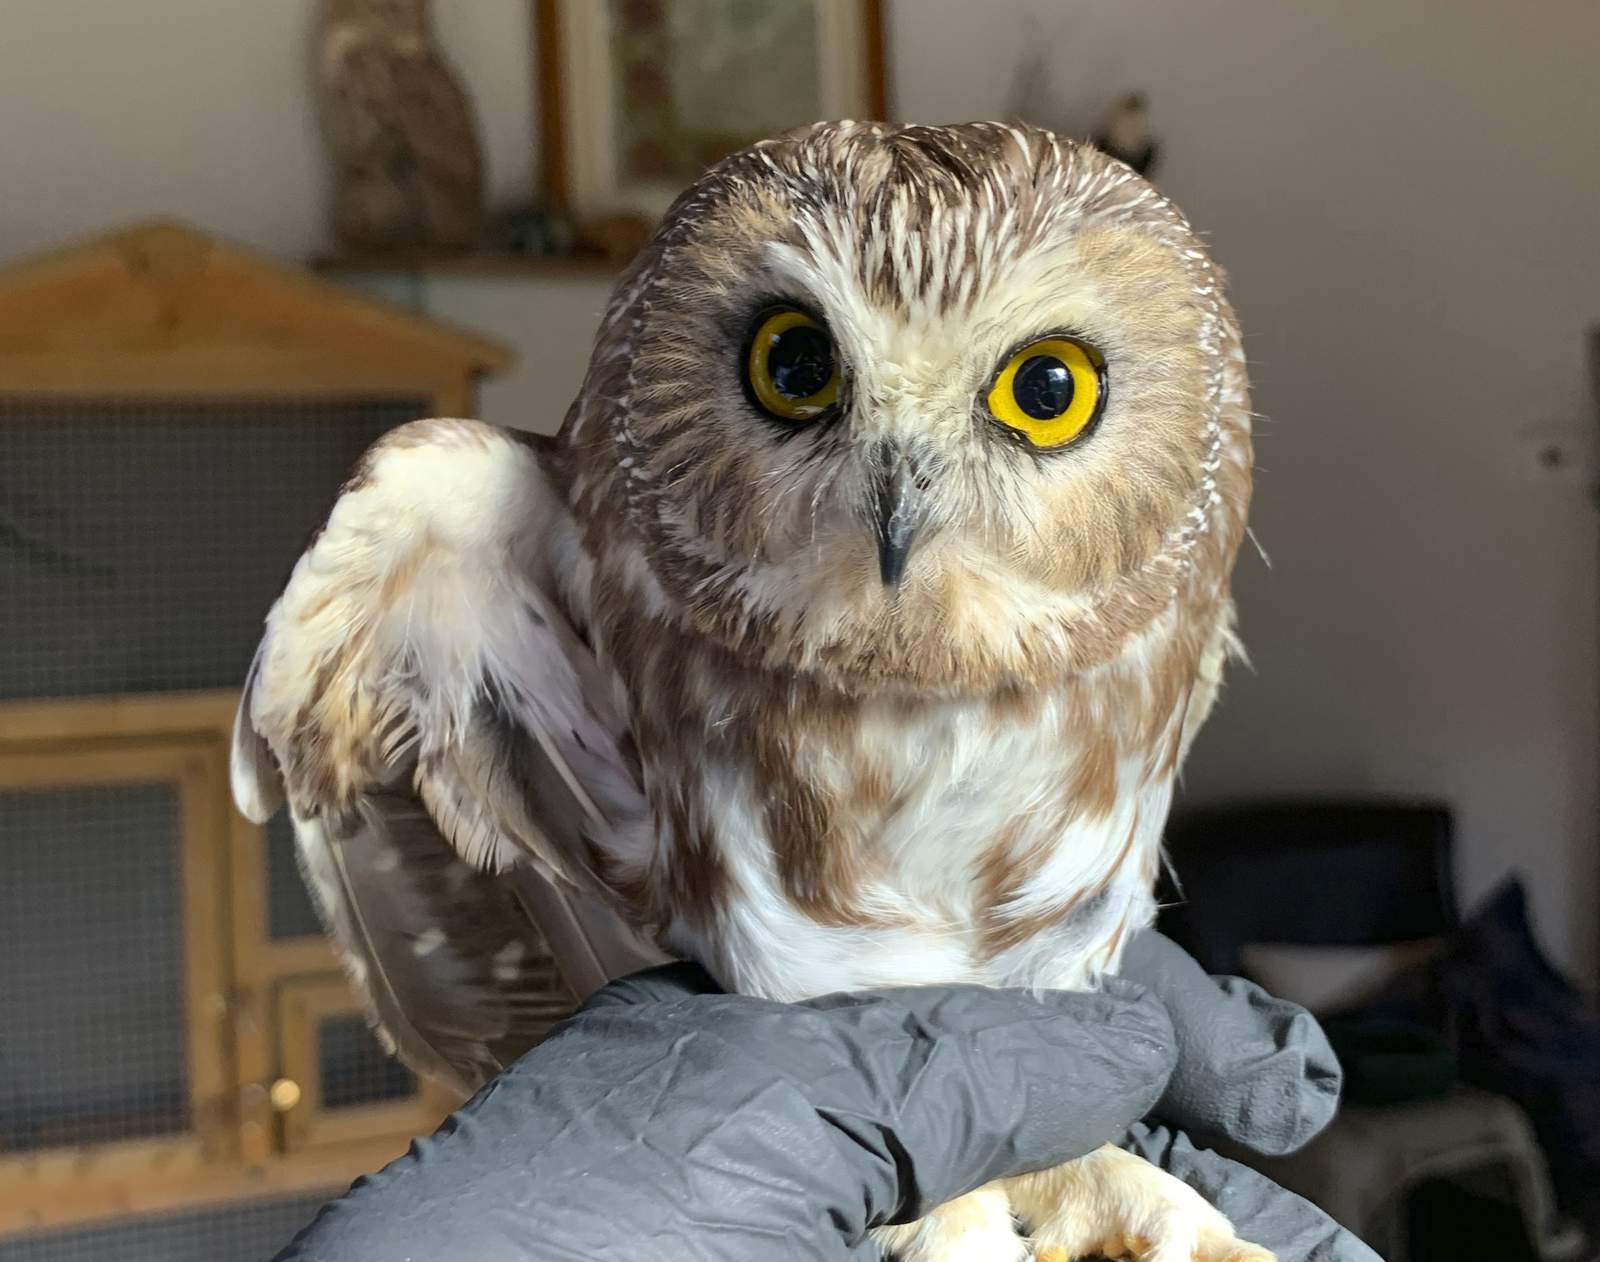 Owl found in Rockefeller Center tree could take flight soon